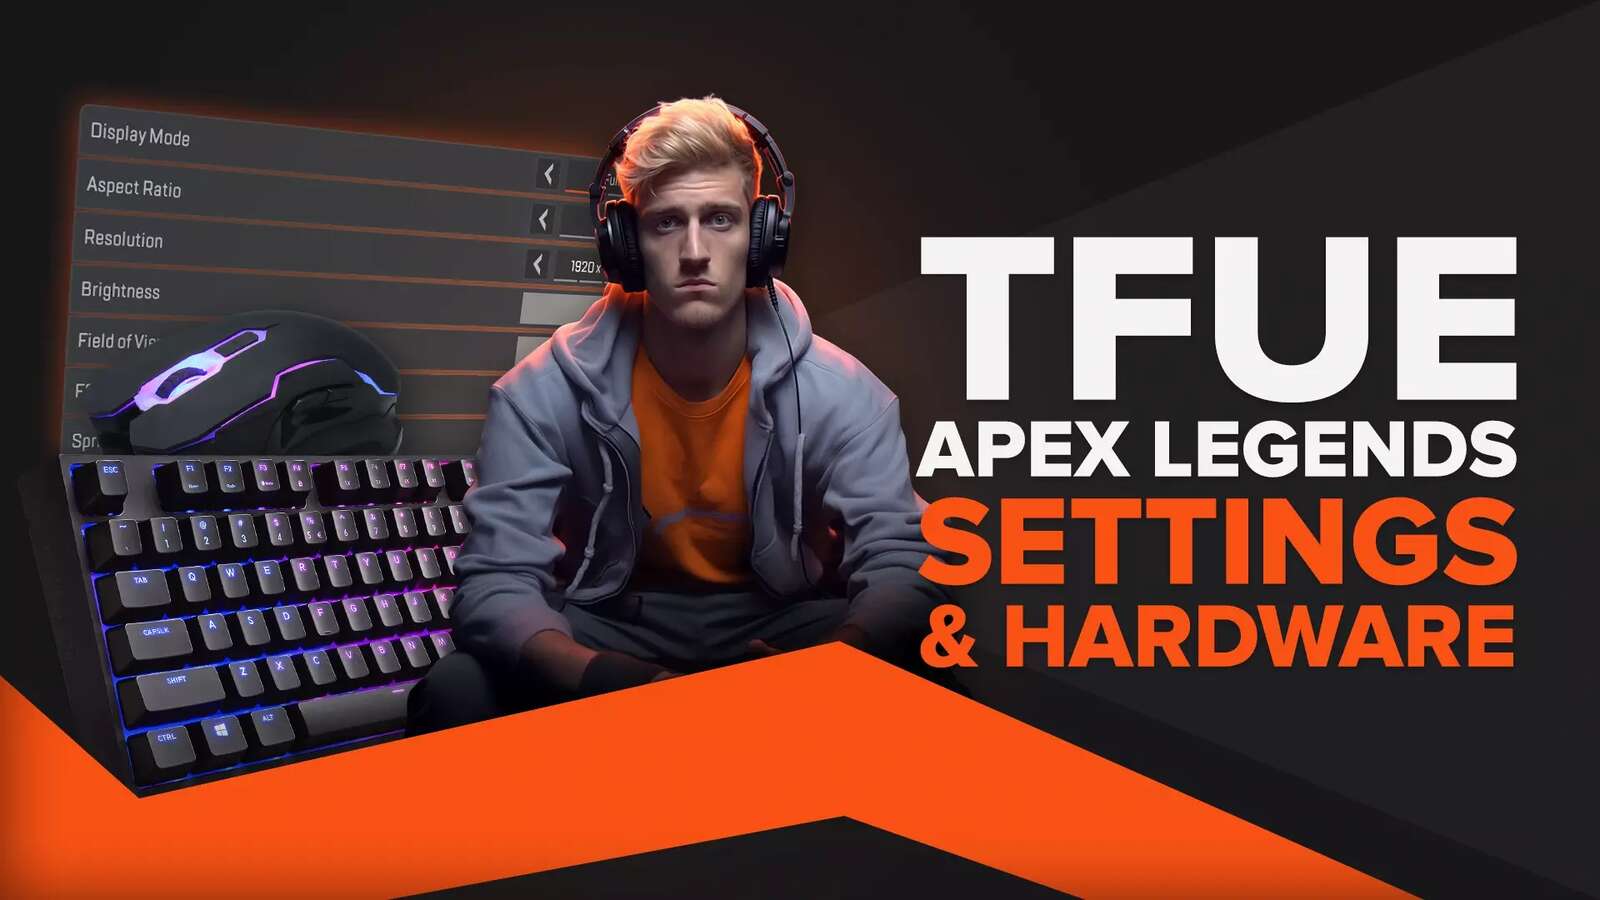 Tfue Apex Legends Settings [/w Hardware]